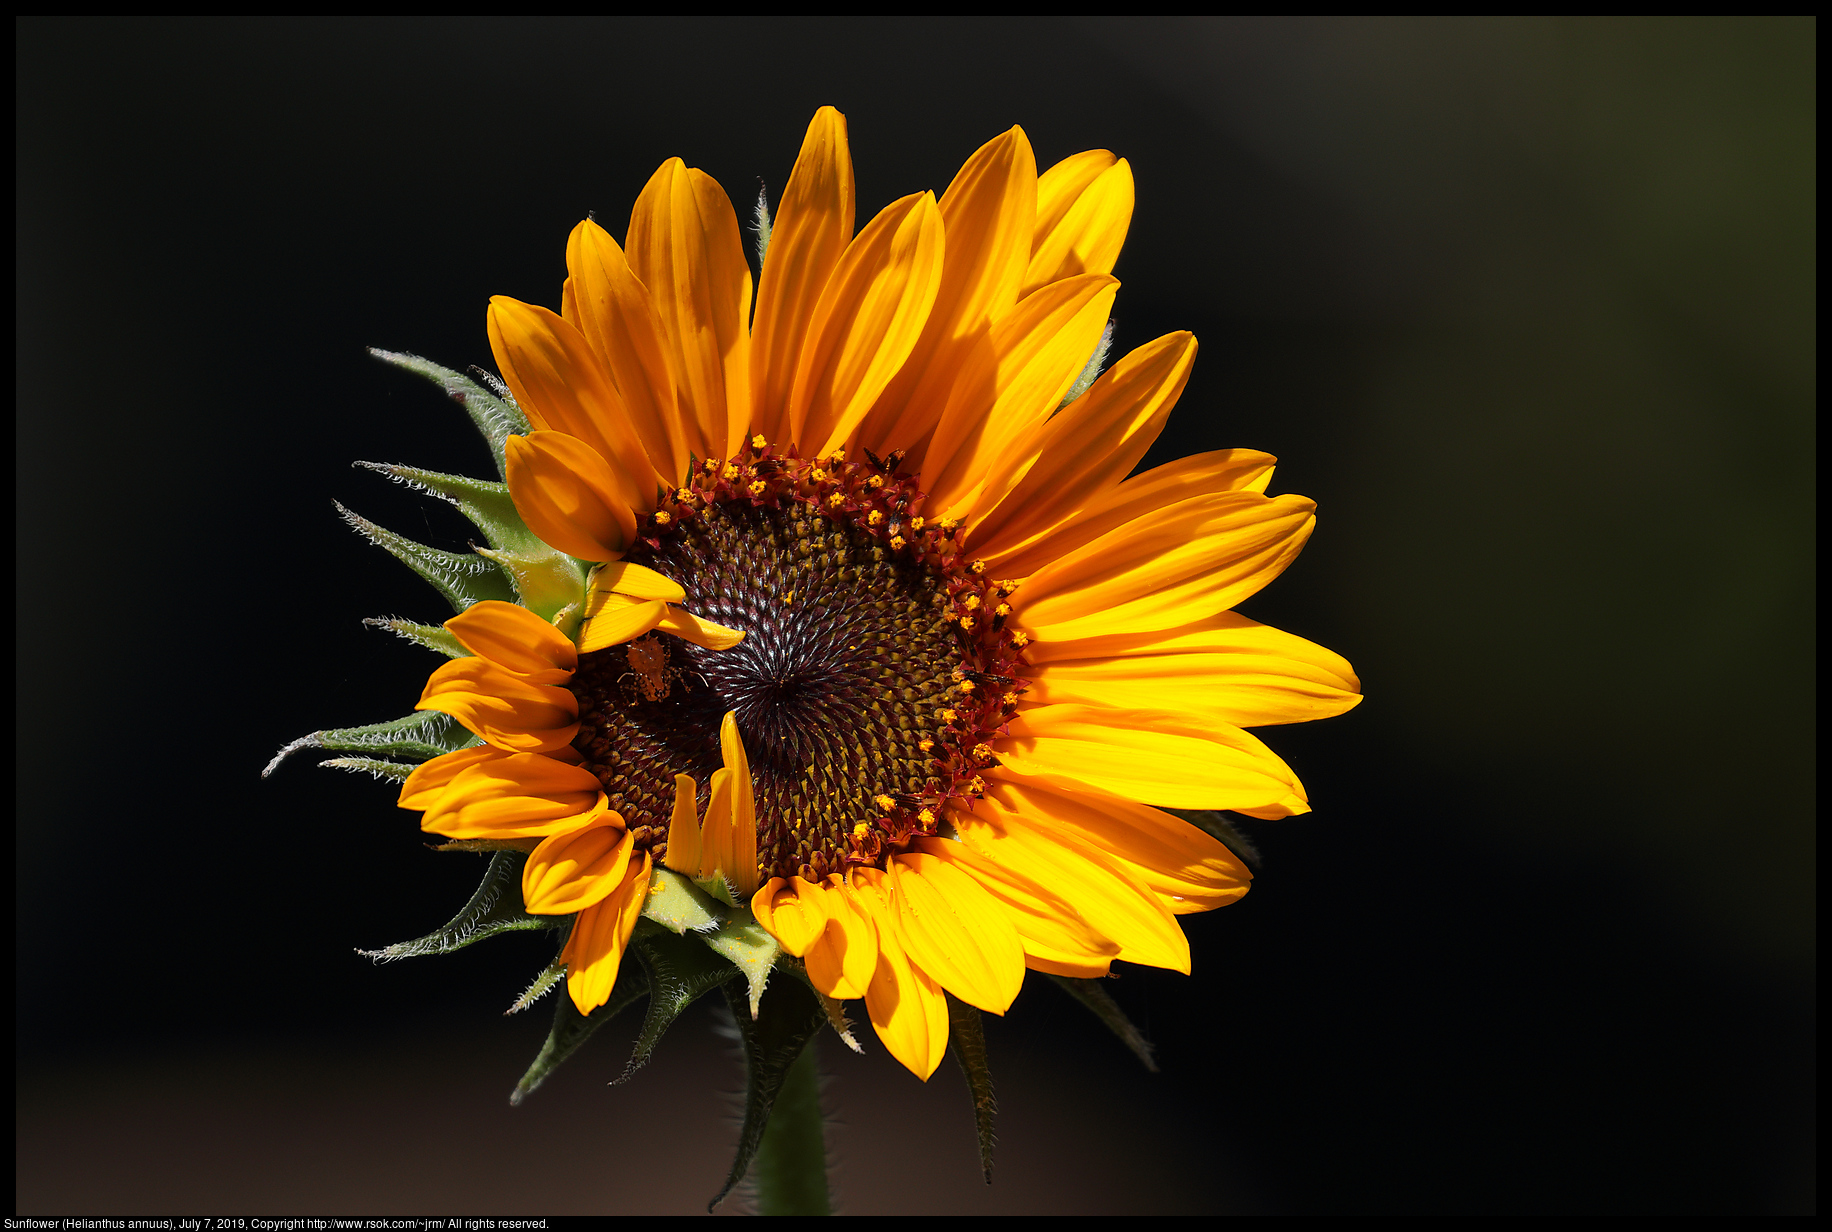 Sunflower (Helianthus annuus), July 7, 2019